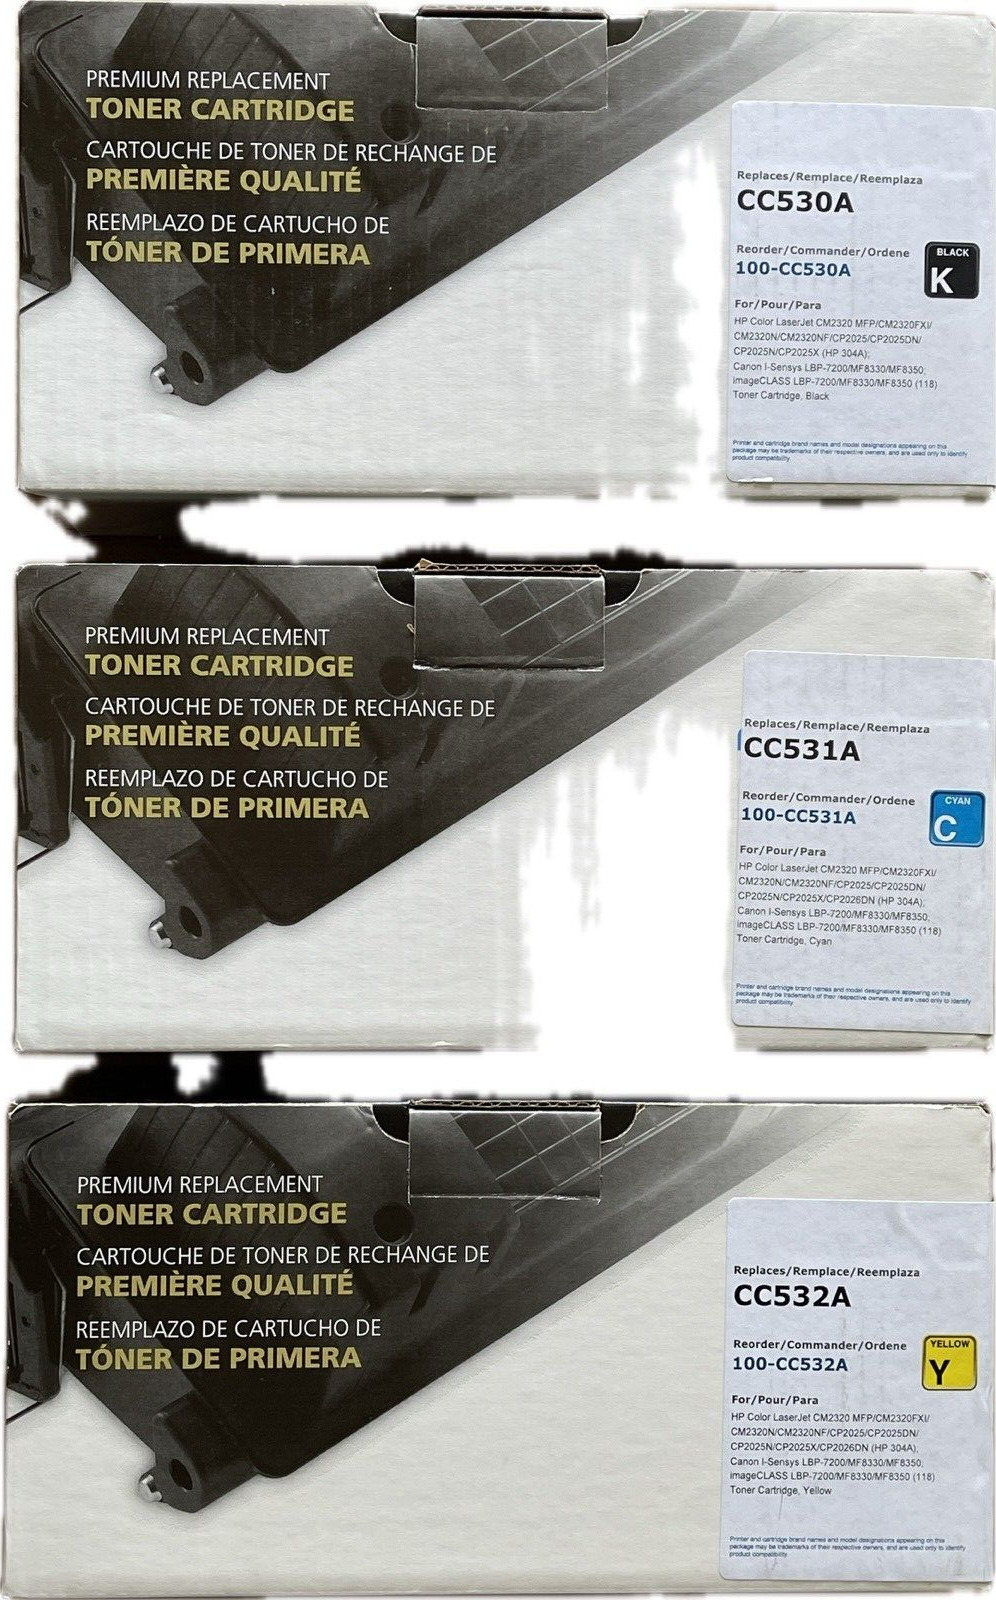 New Sealed Premium Toner Cartridge Lot of 3 - CC530A/531A/532A Black Cyan Yellow